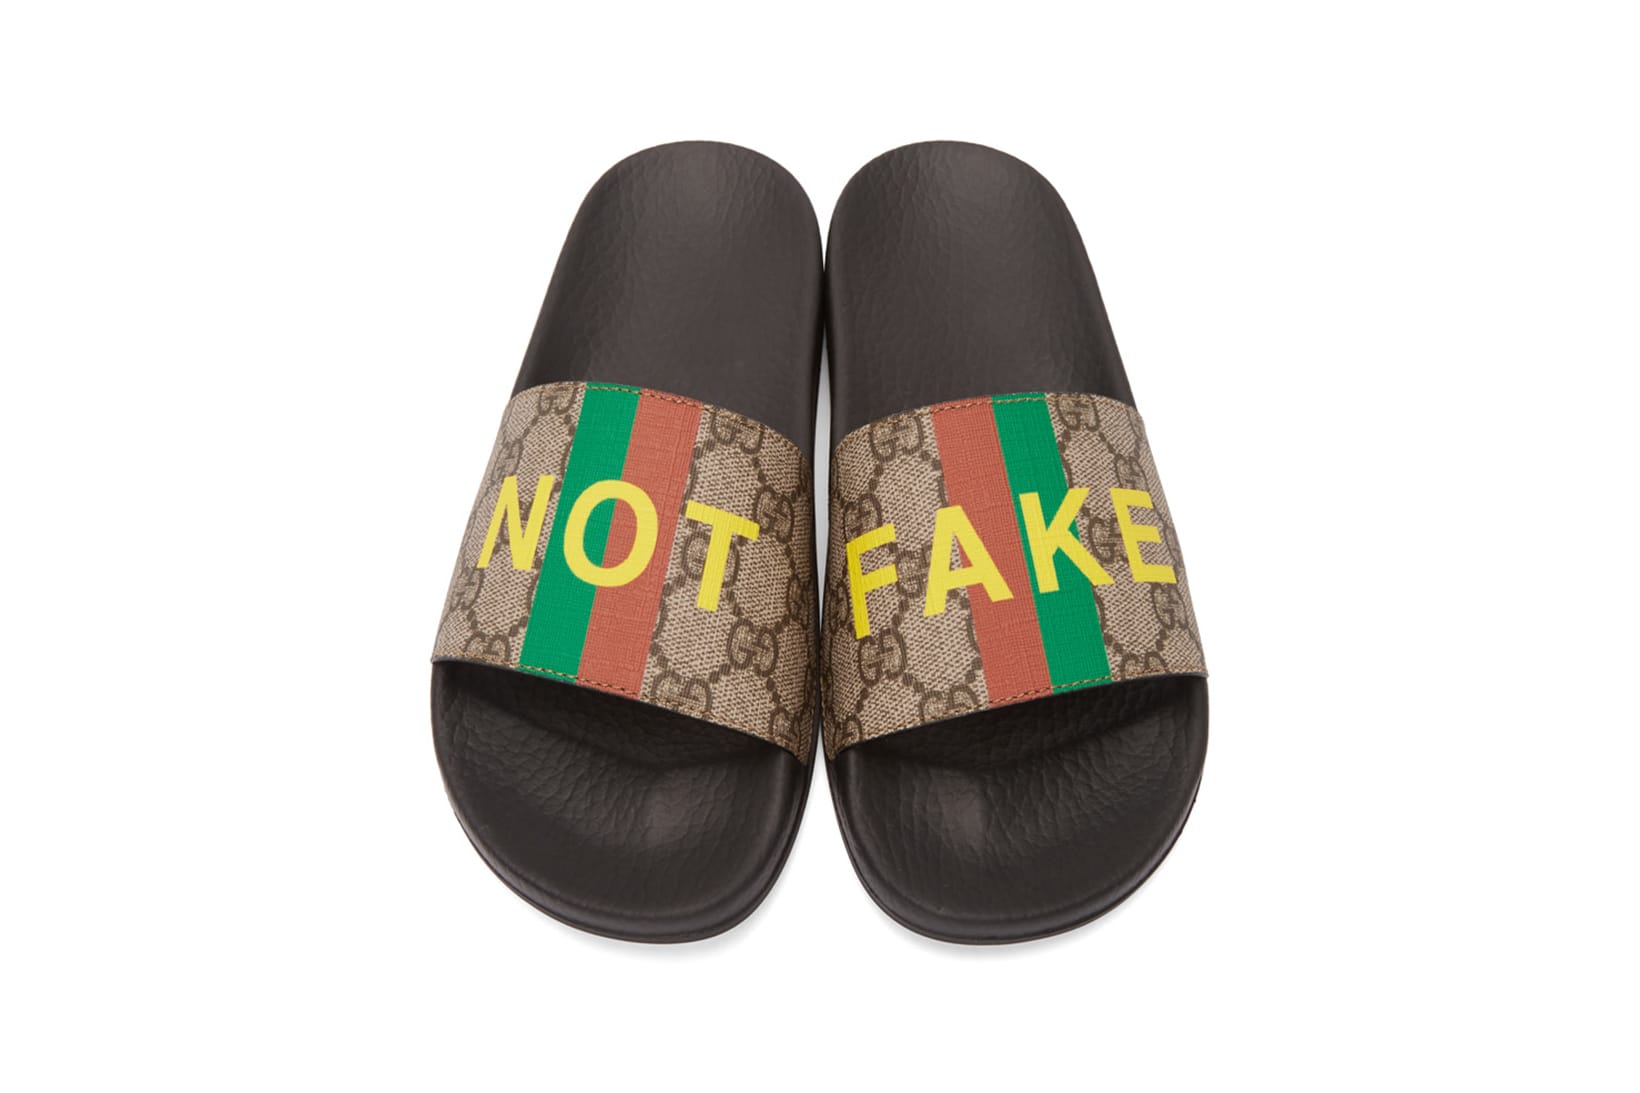 fake supreme slippers